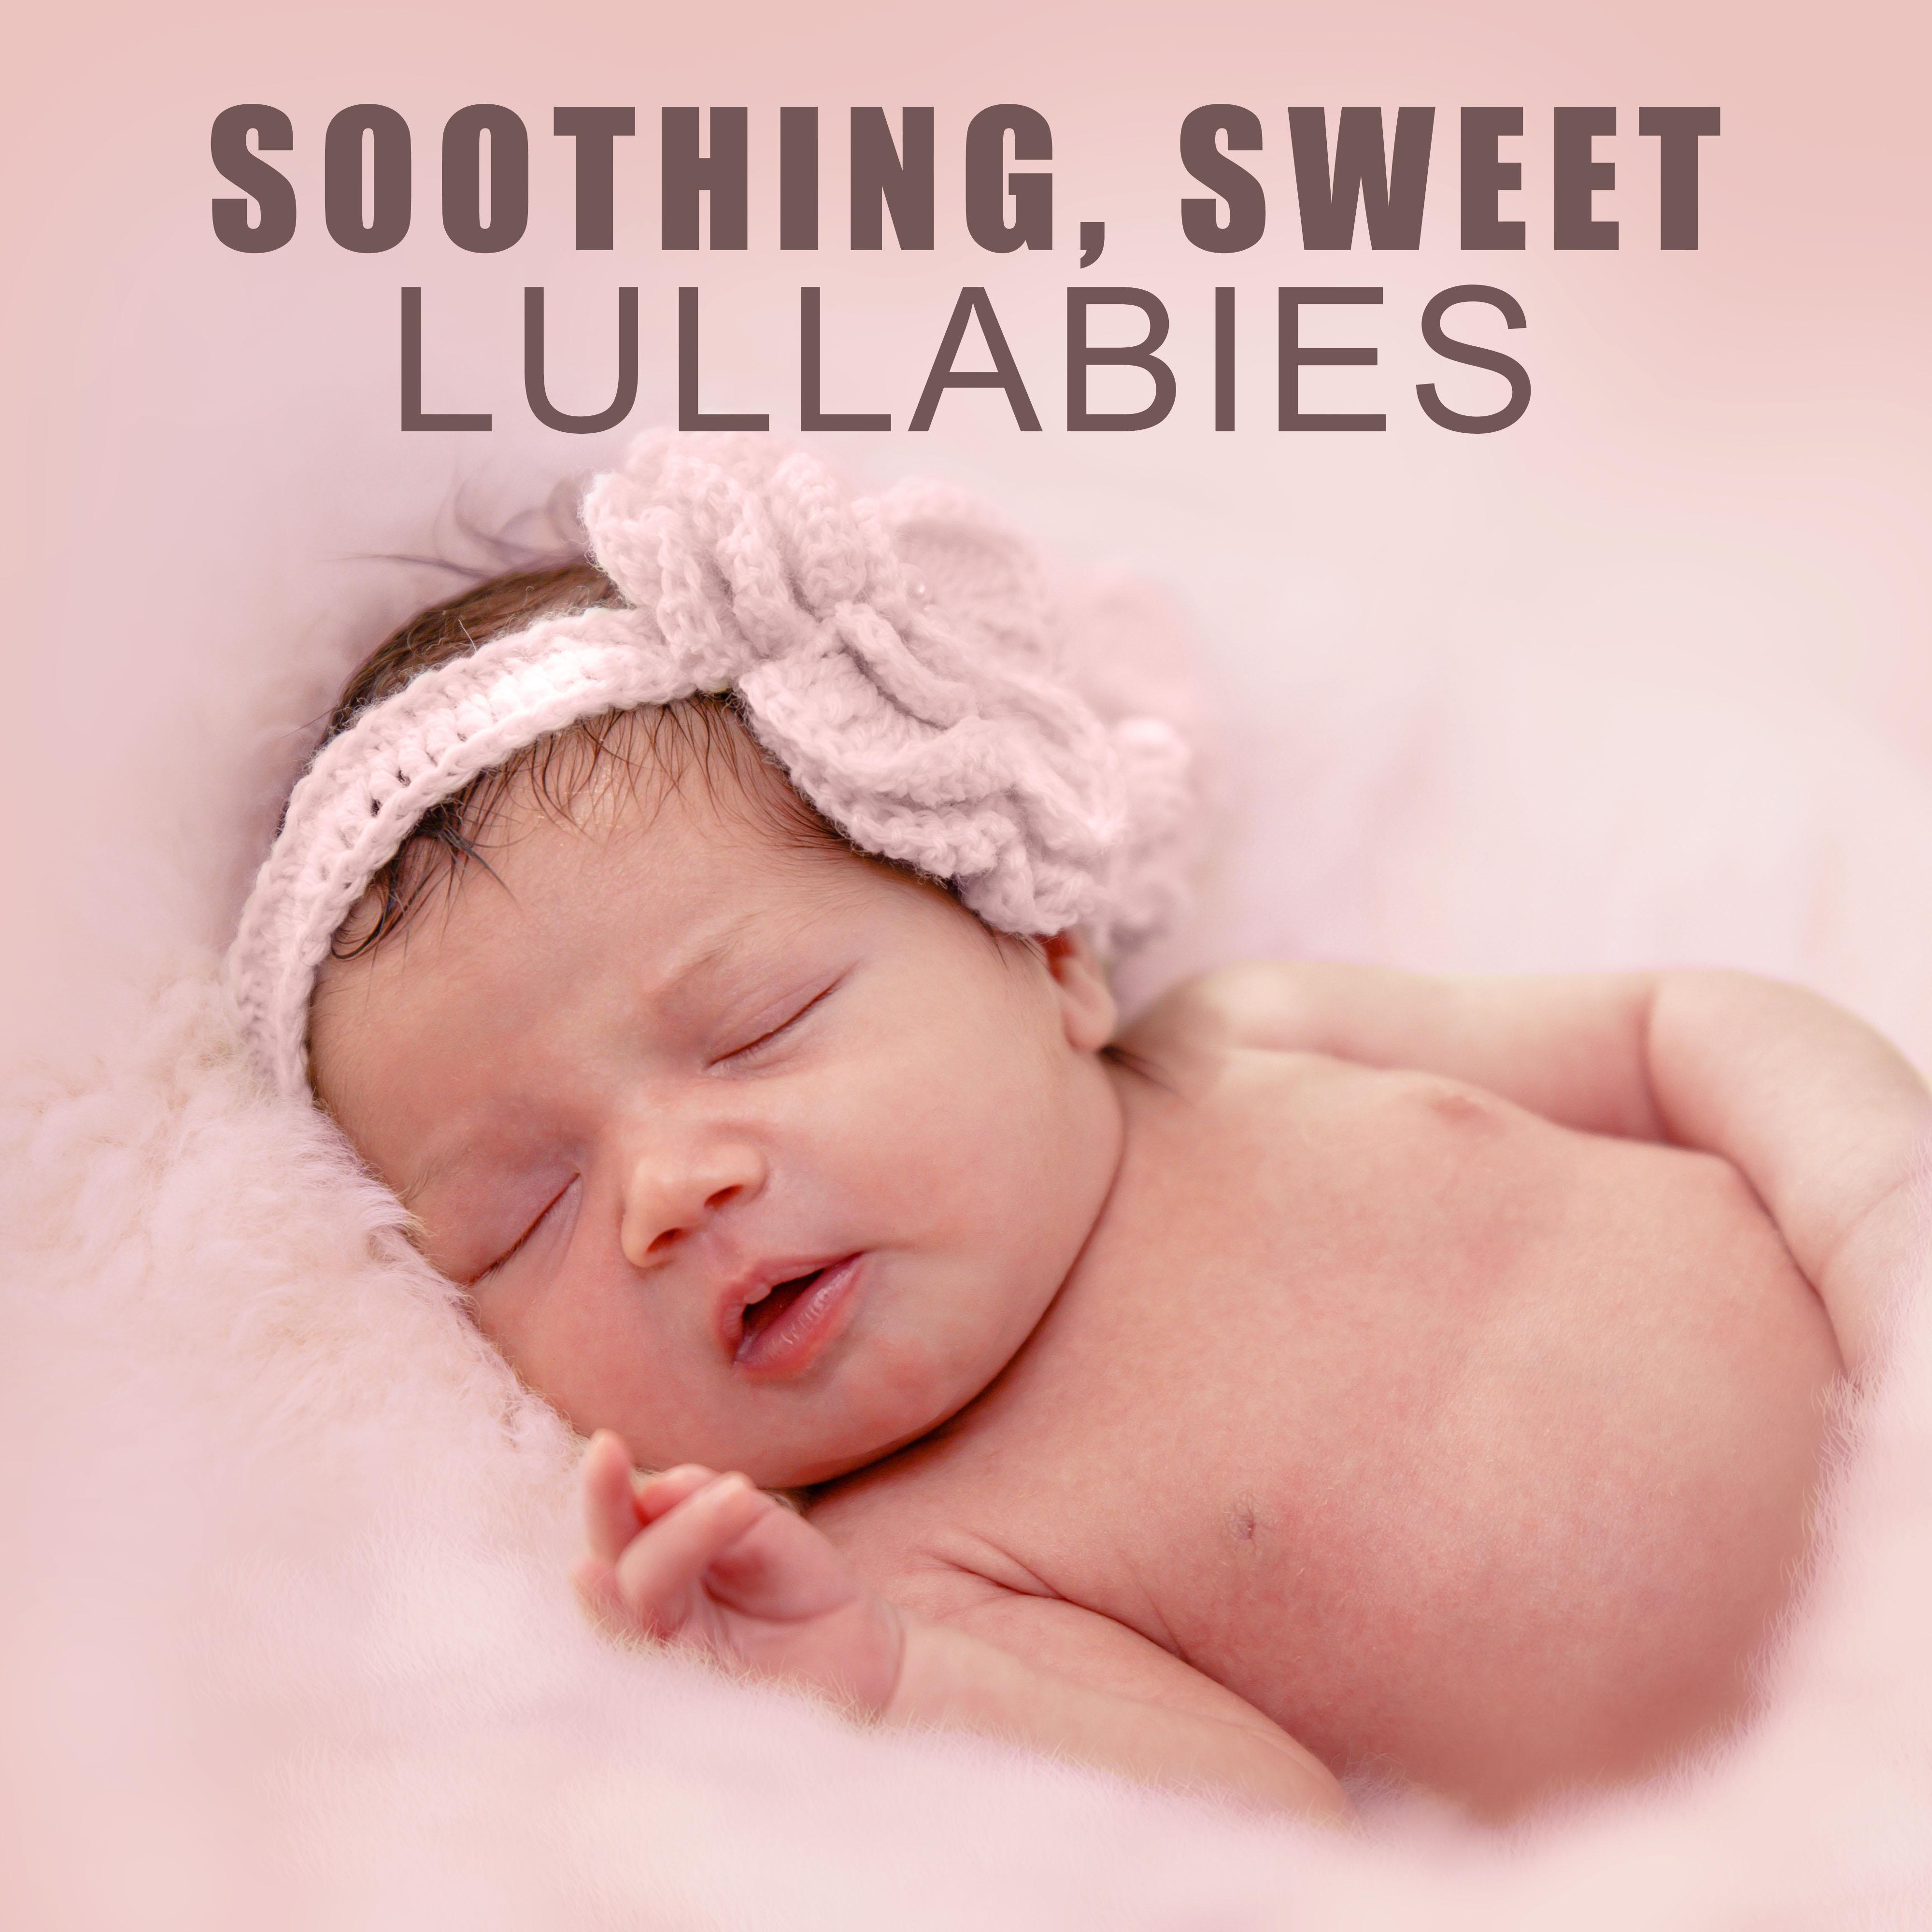 Soothing, Sweet Lullabies  Classical Lullabies to Sleep, Quiet Baby, Peaceful Sleep, Relaxation Lullabies at Night